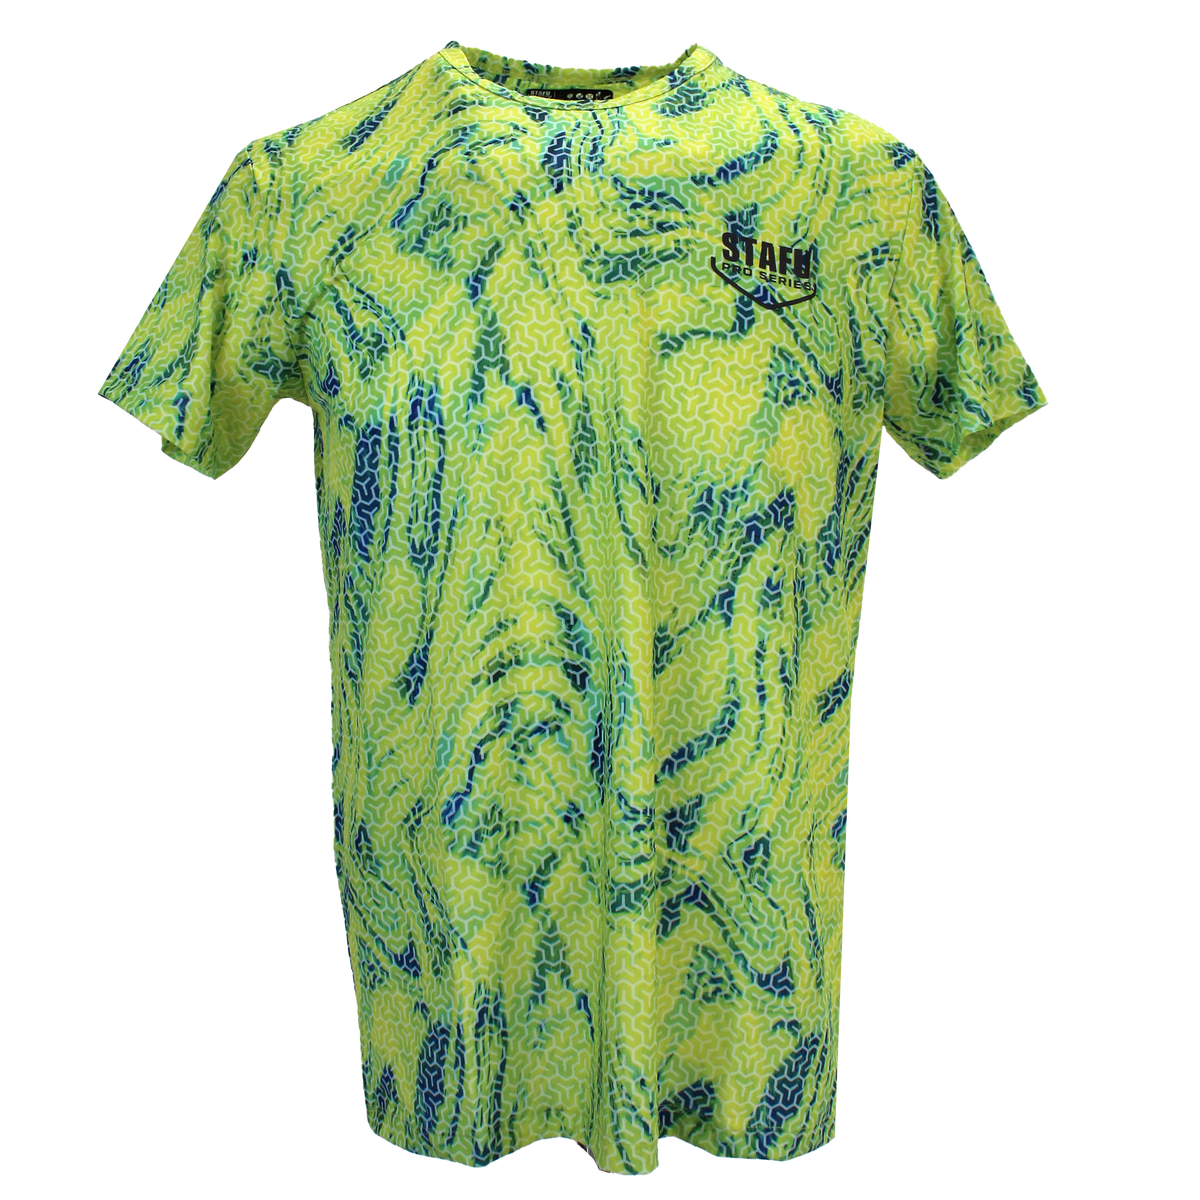 .99 Short Sleeve Ultra Light Performance T-Shirt - Trophy - Lime